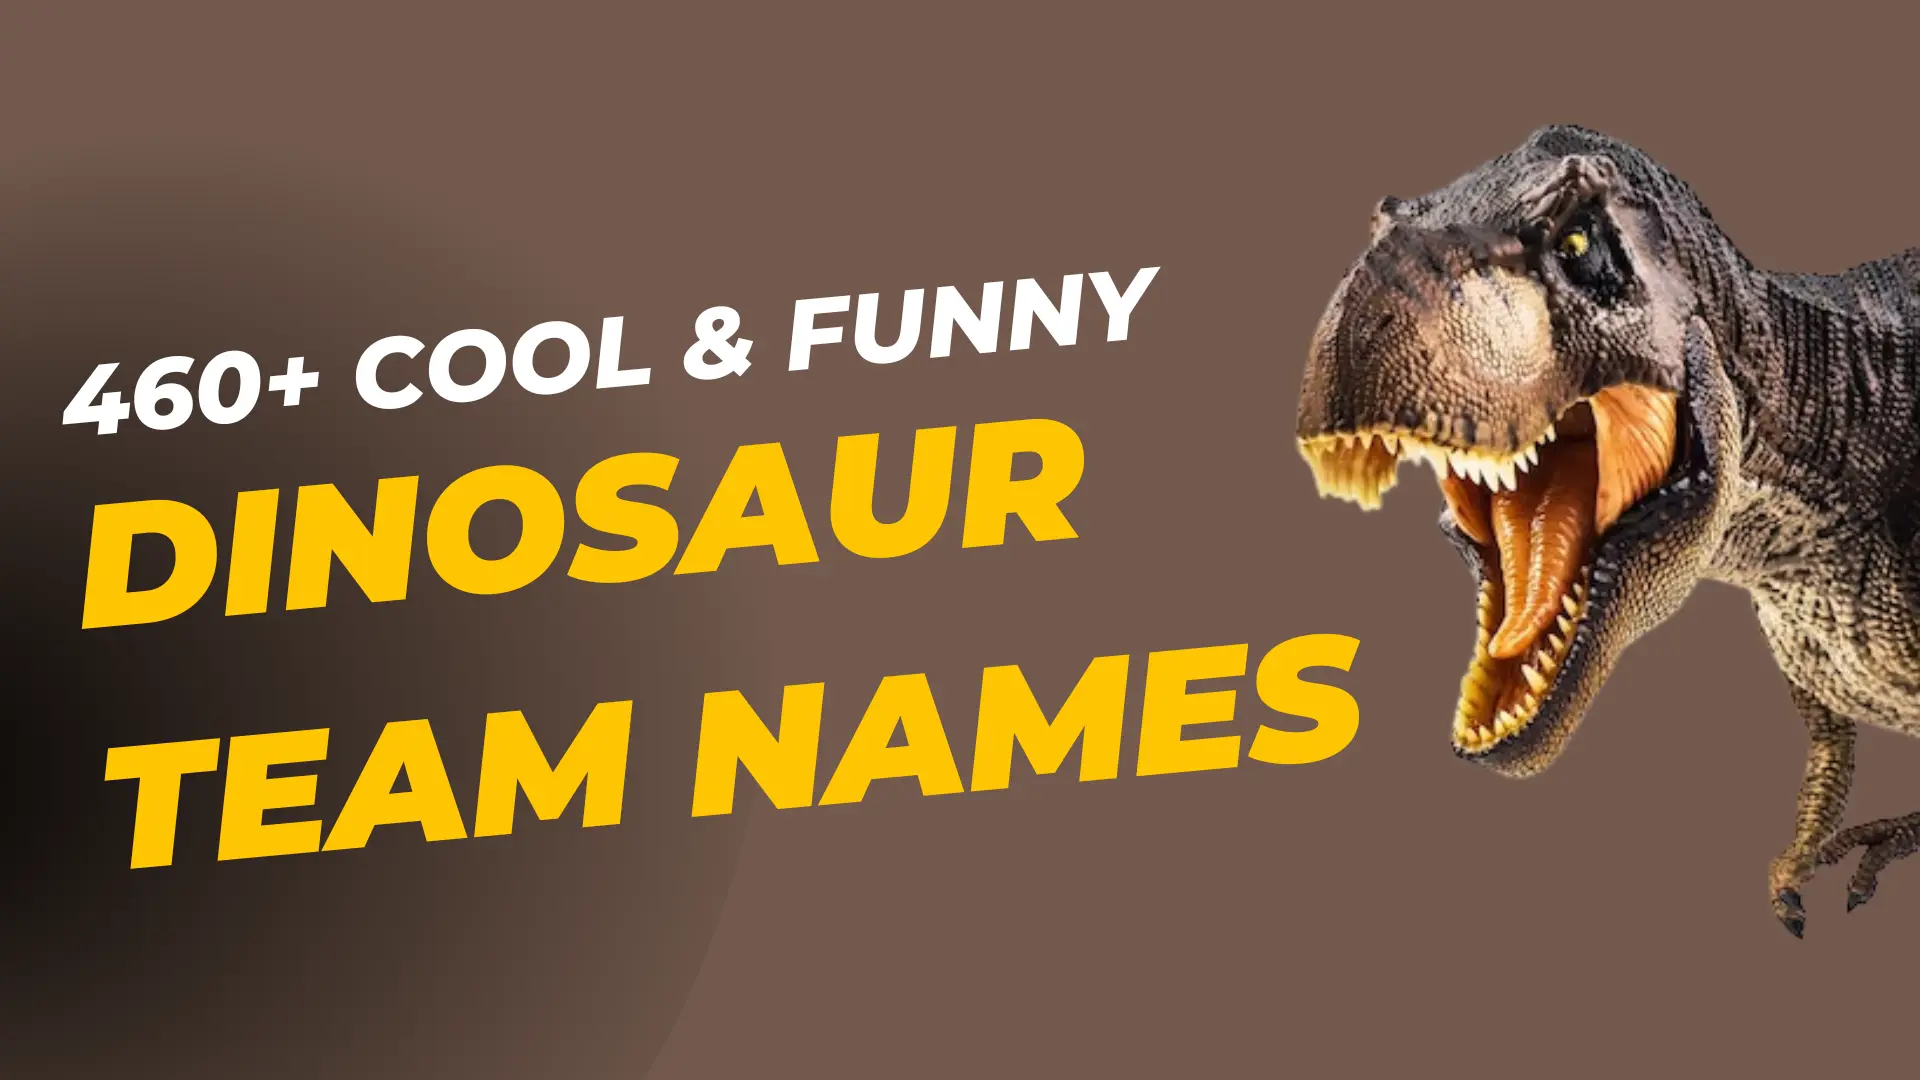 460+ Cool & Funny Dinosaur Team Names